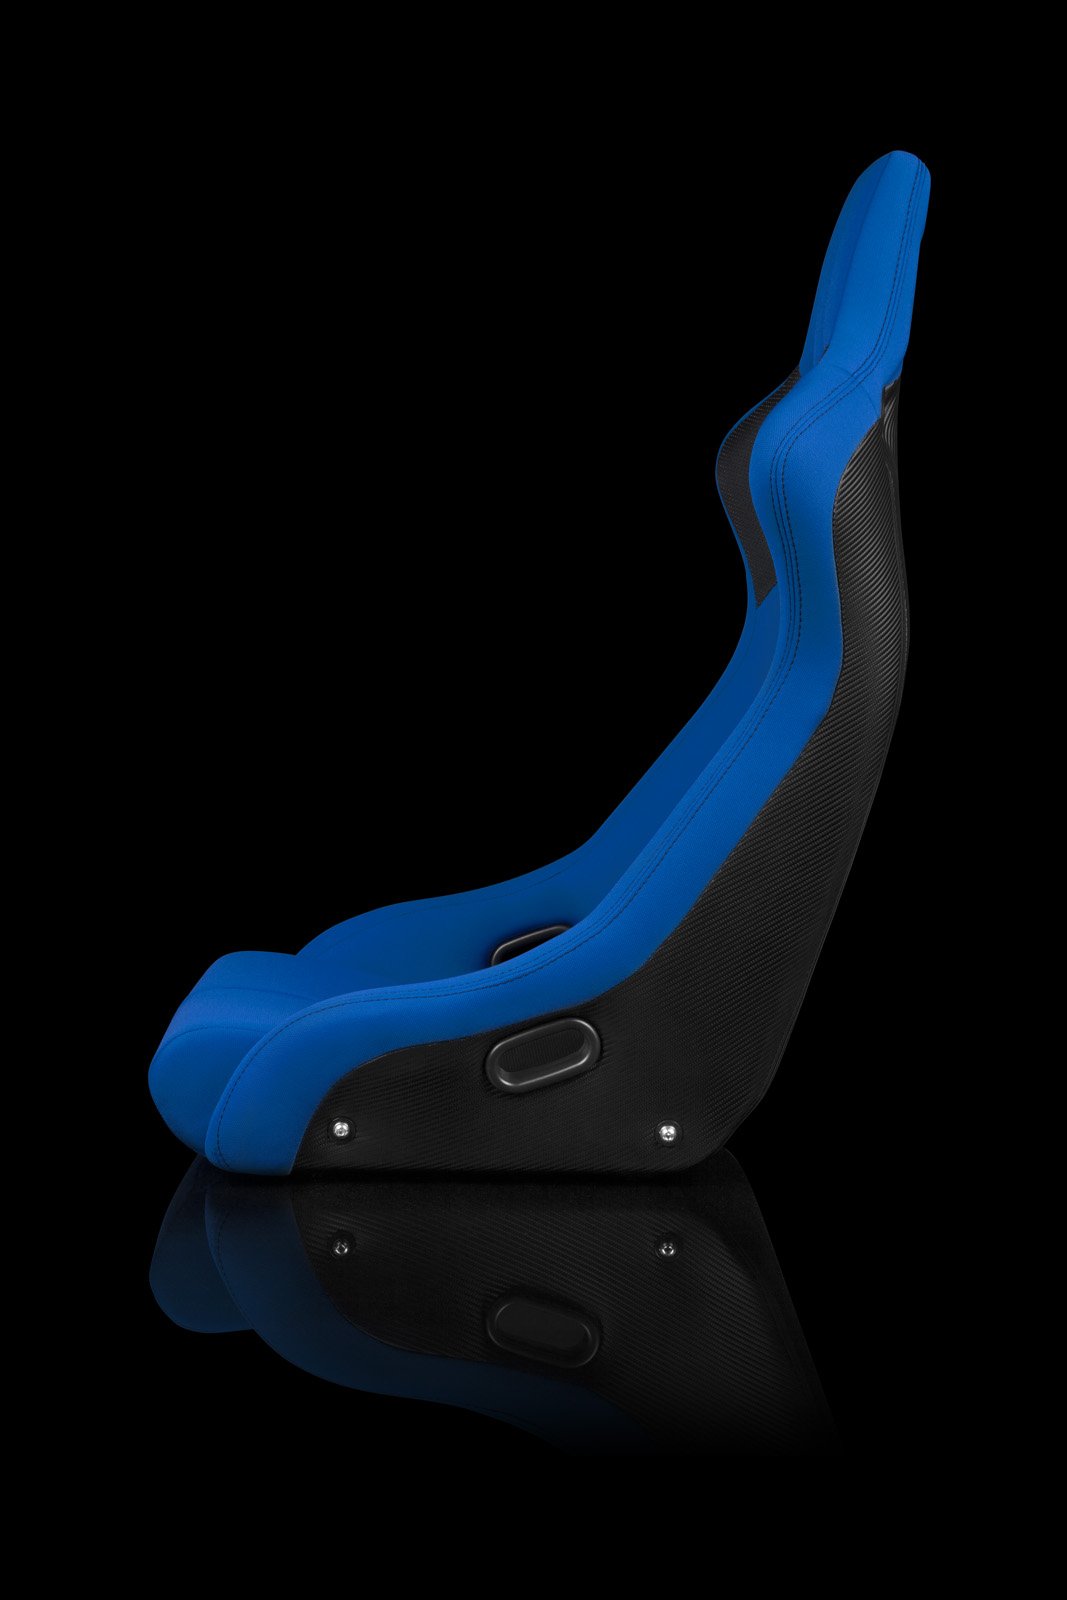 Braum Venom-R Series Fixed Back Bucket Seat - Blue Cloth / Carbon Fiber - Lowered Lifestyle